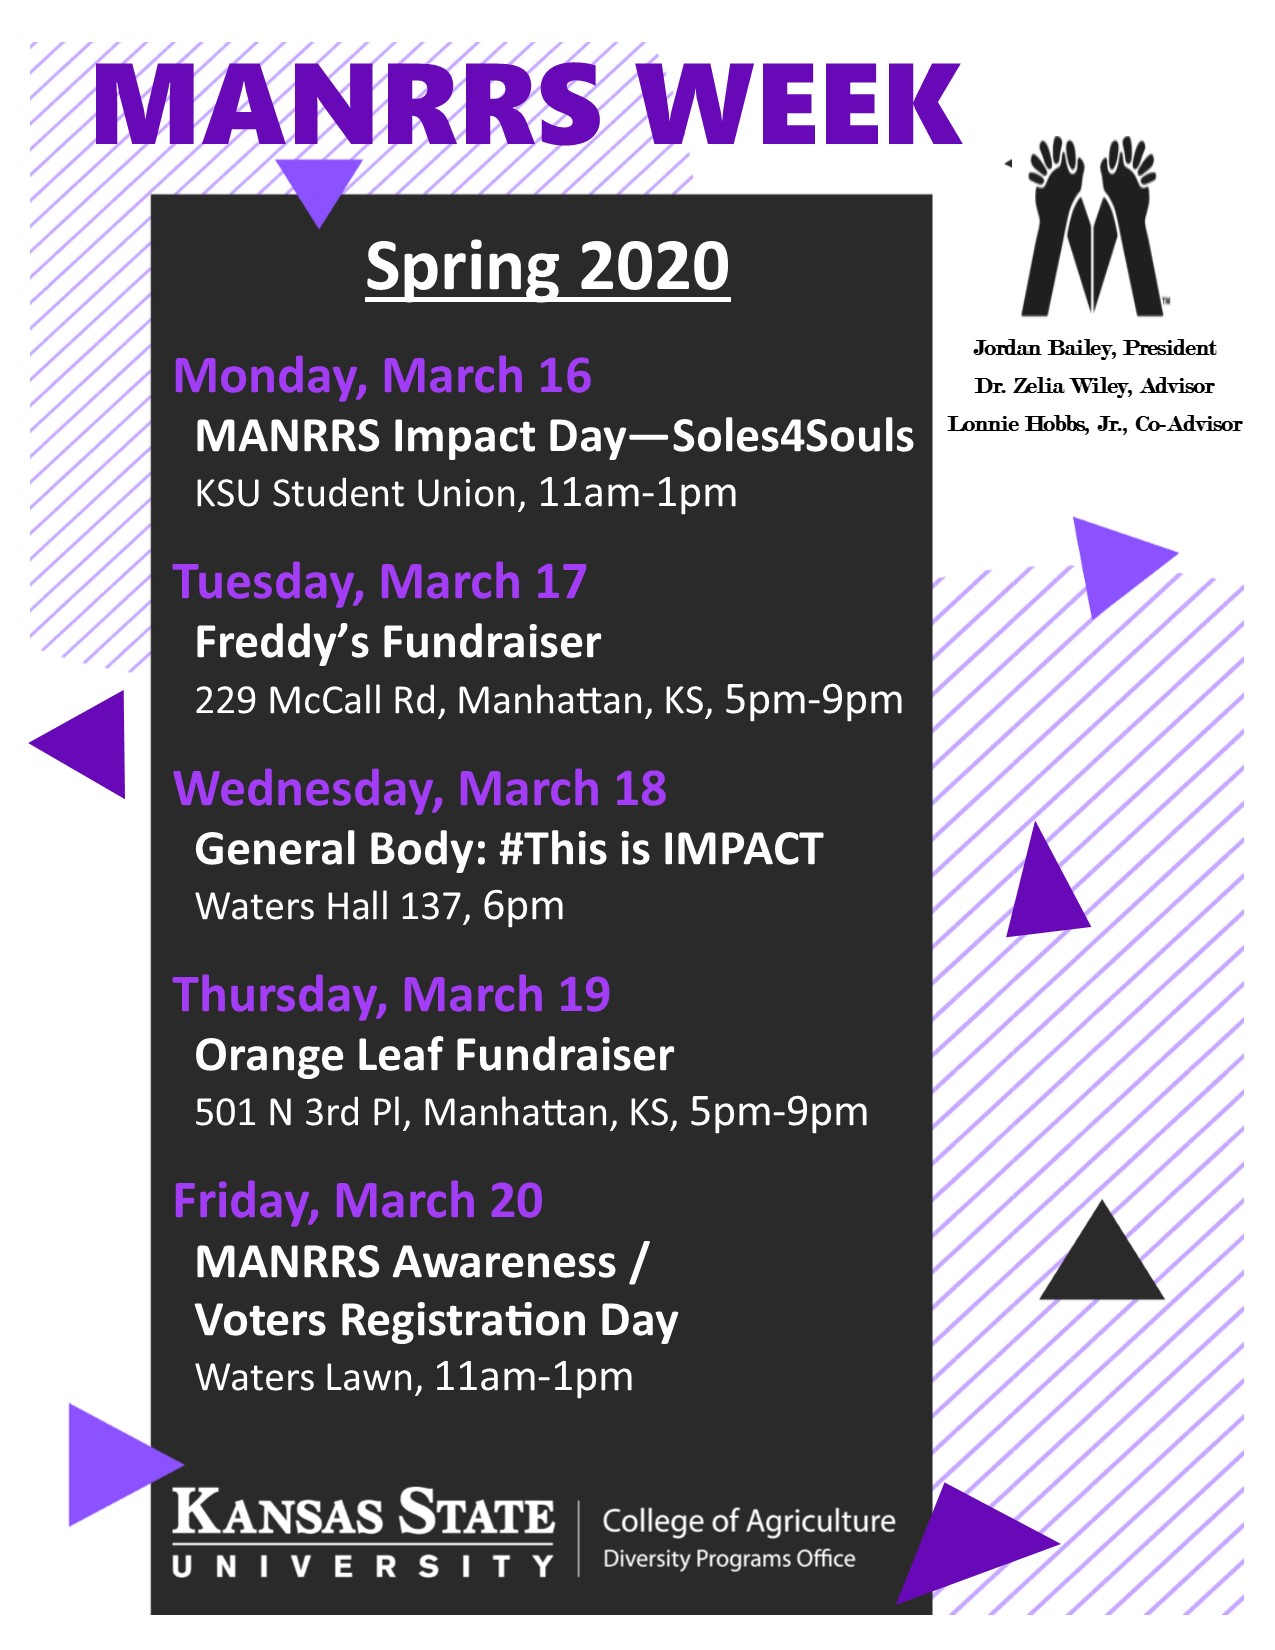 The spring 2020 MANRRS Week flyer